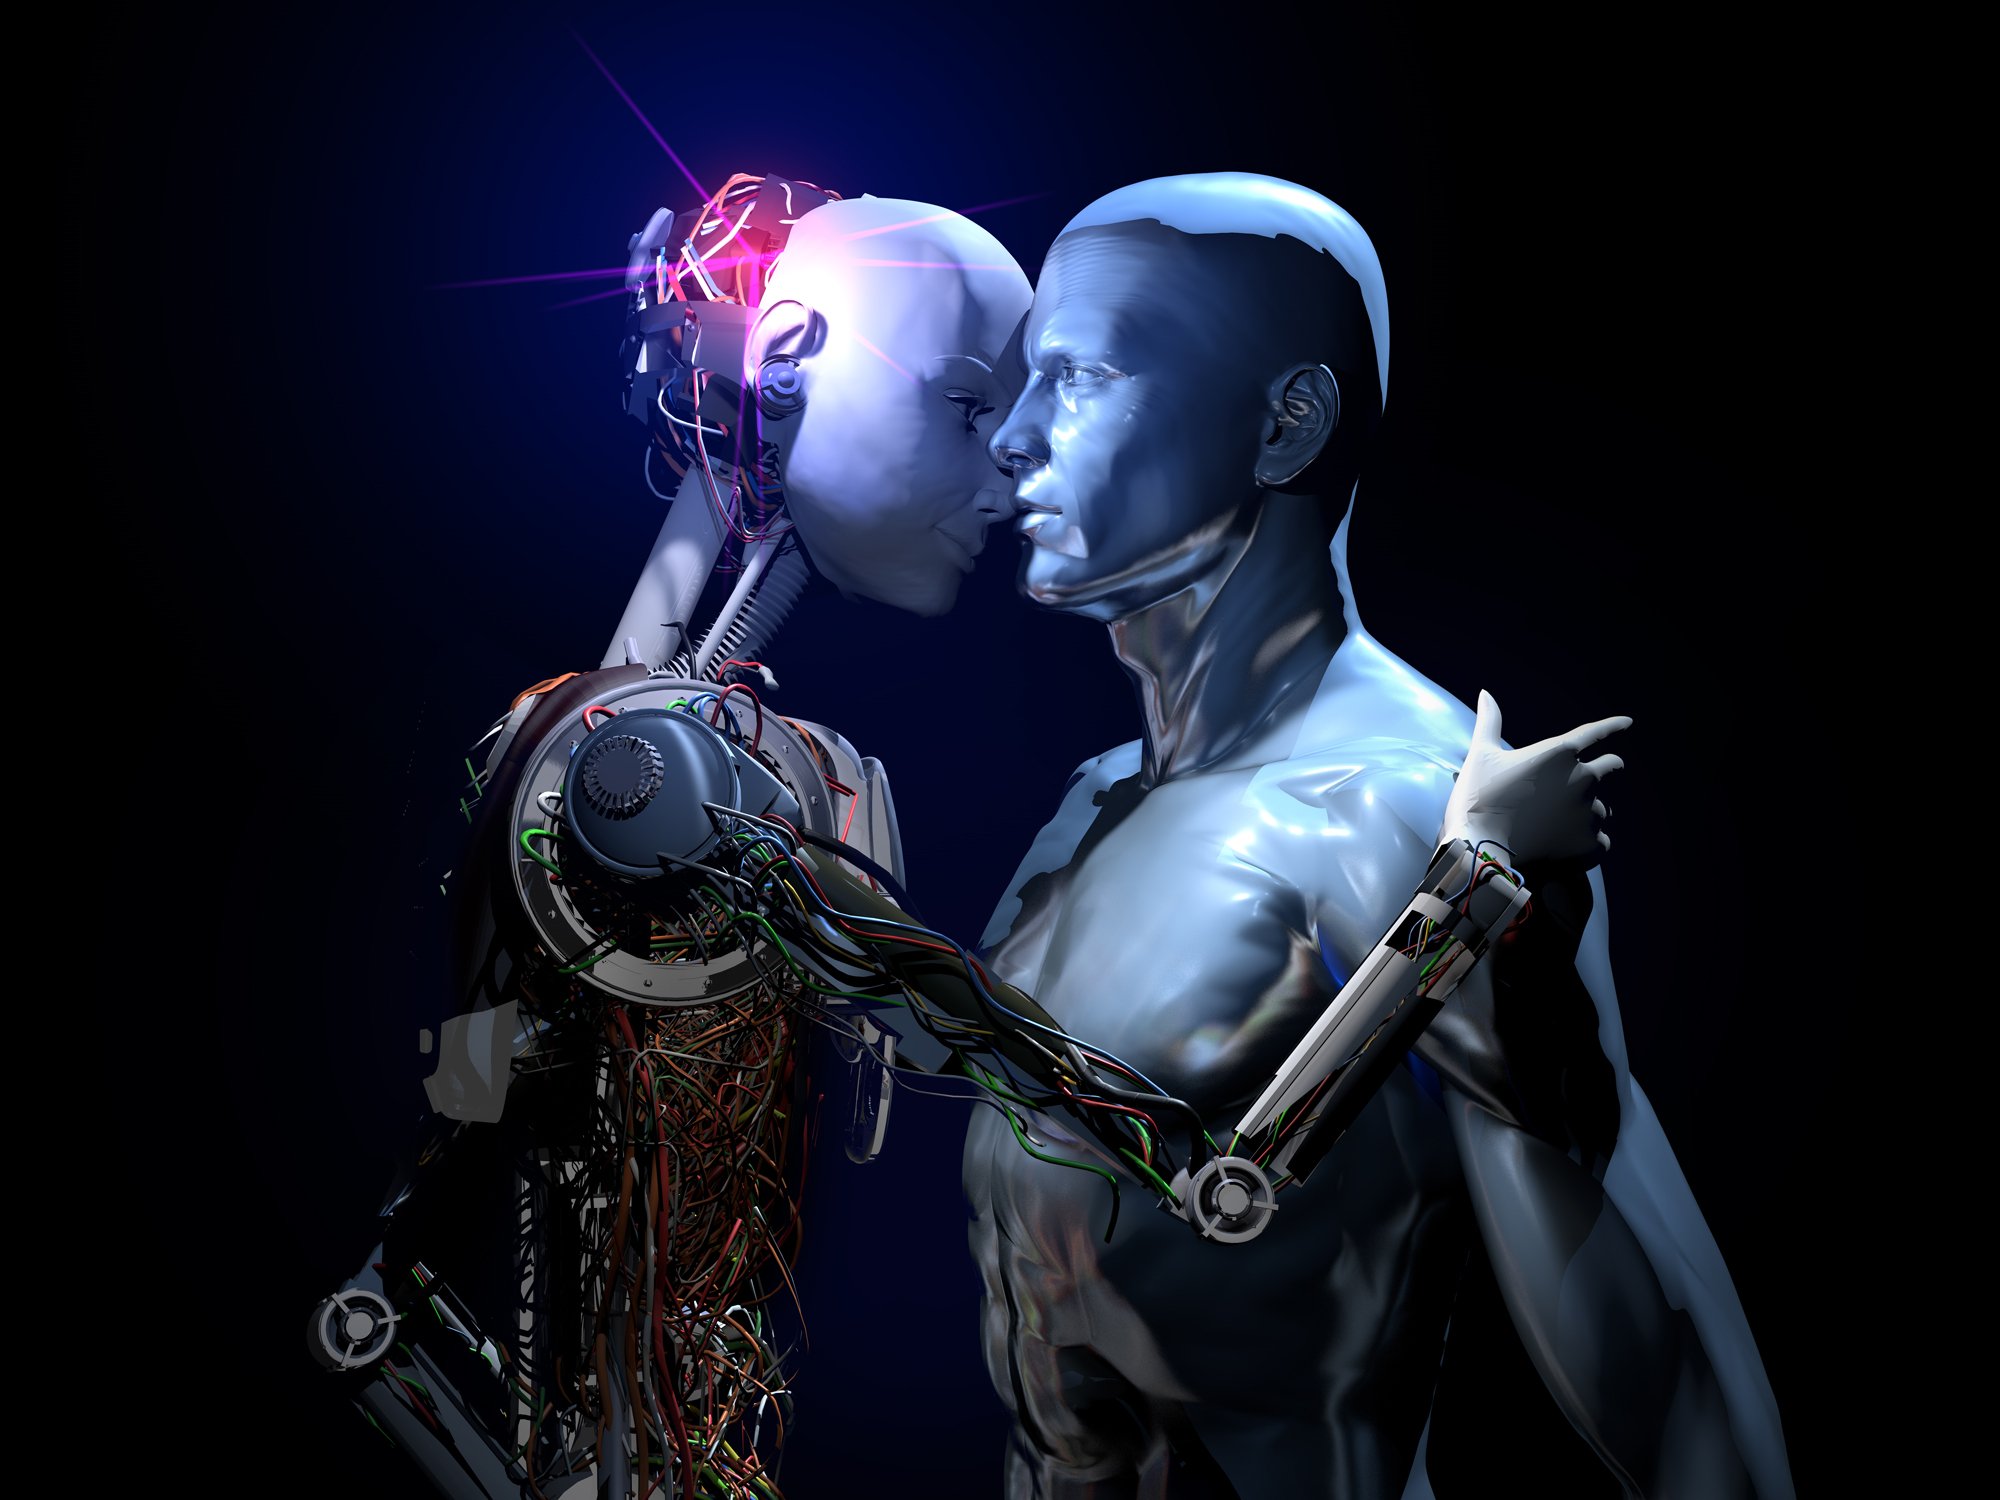 Robot threesome image